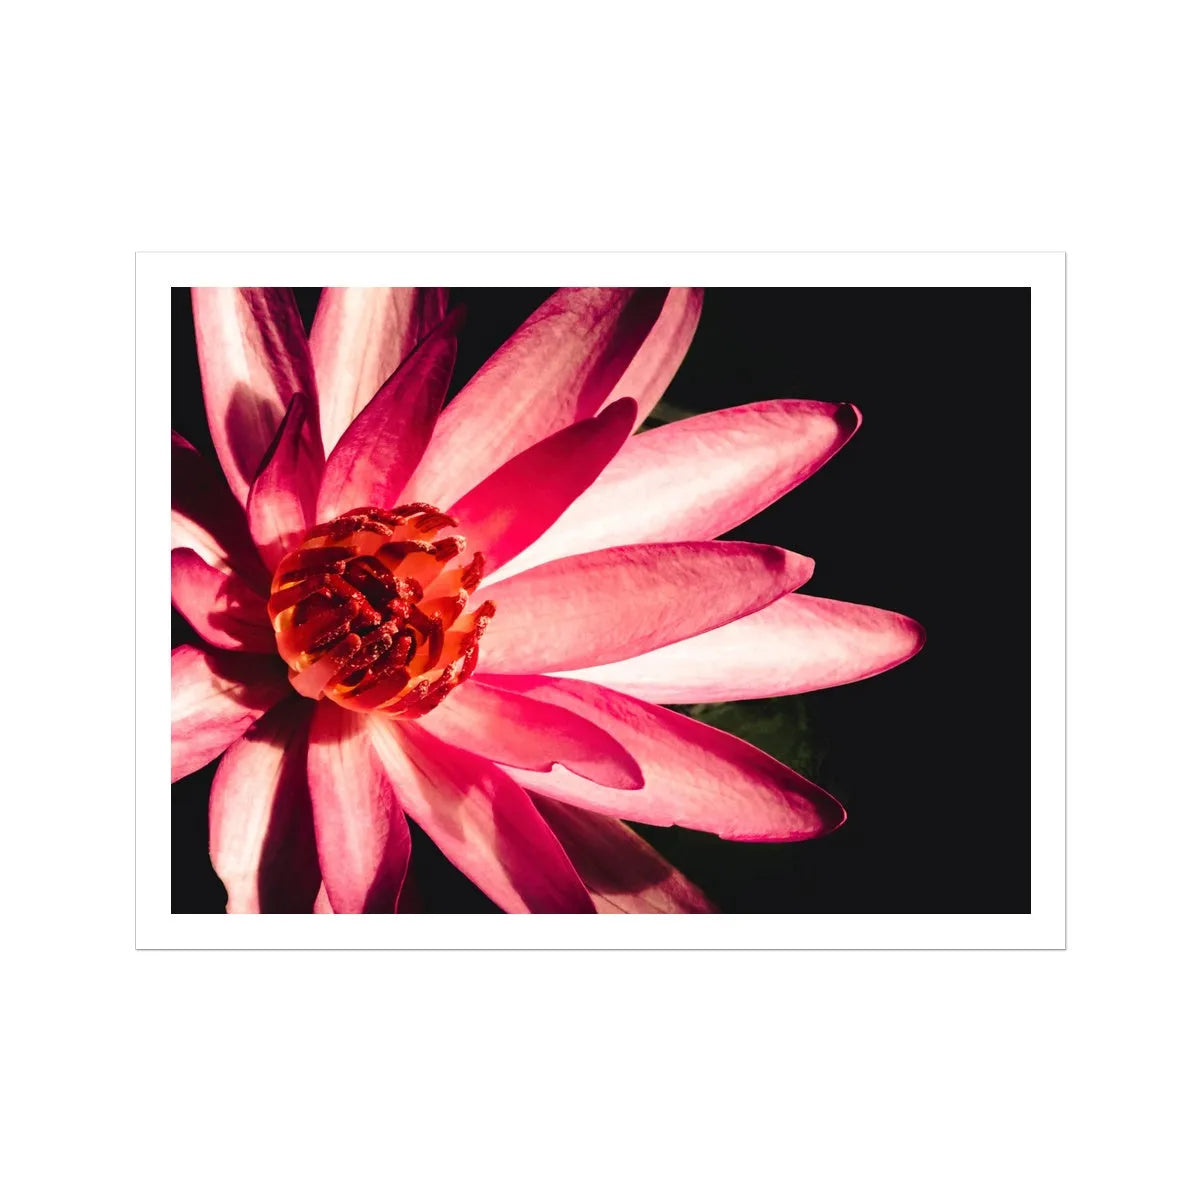 Casanova - Pink Red Lotus Flower Photography Art Print - 40’x30’ - Posters Prints & Visual Artwork - Aesthetic Art